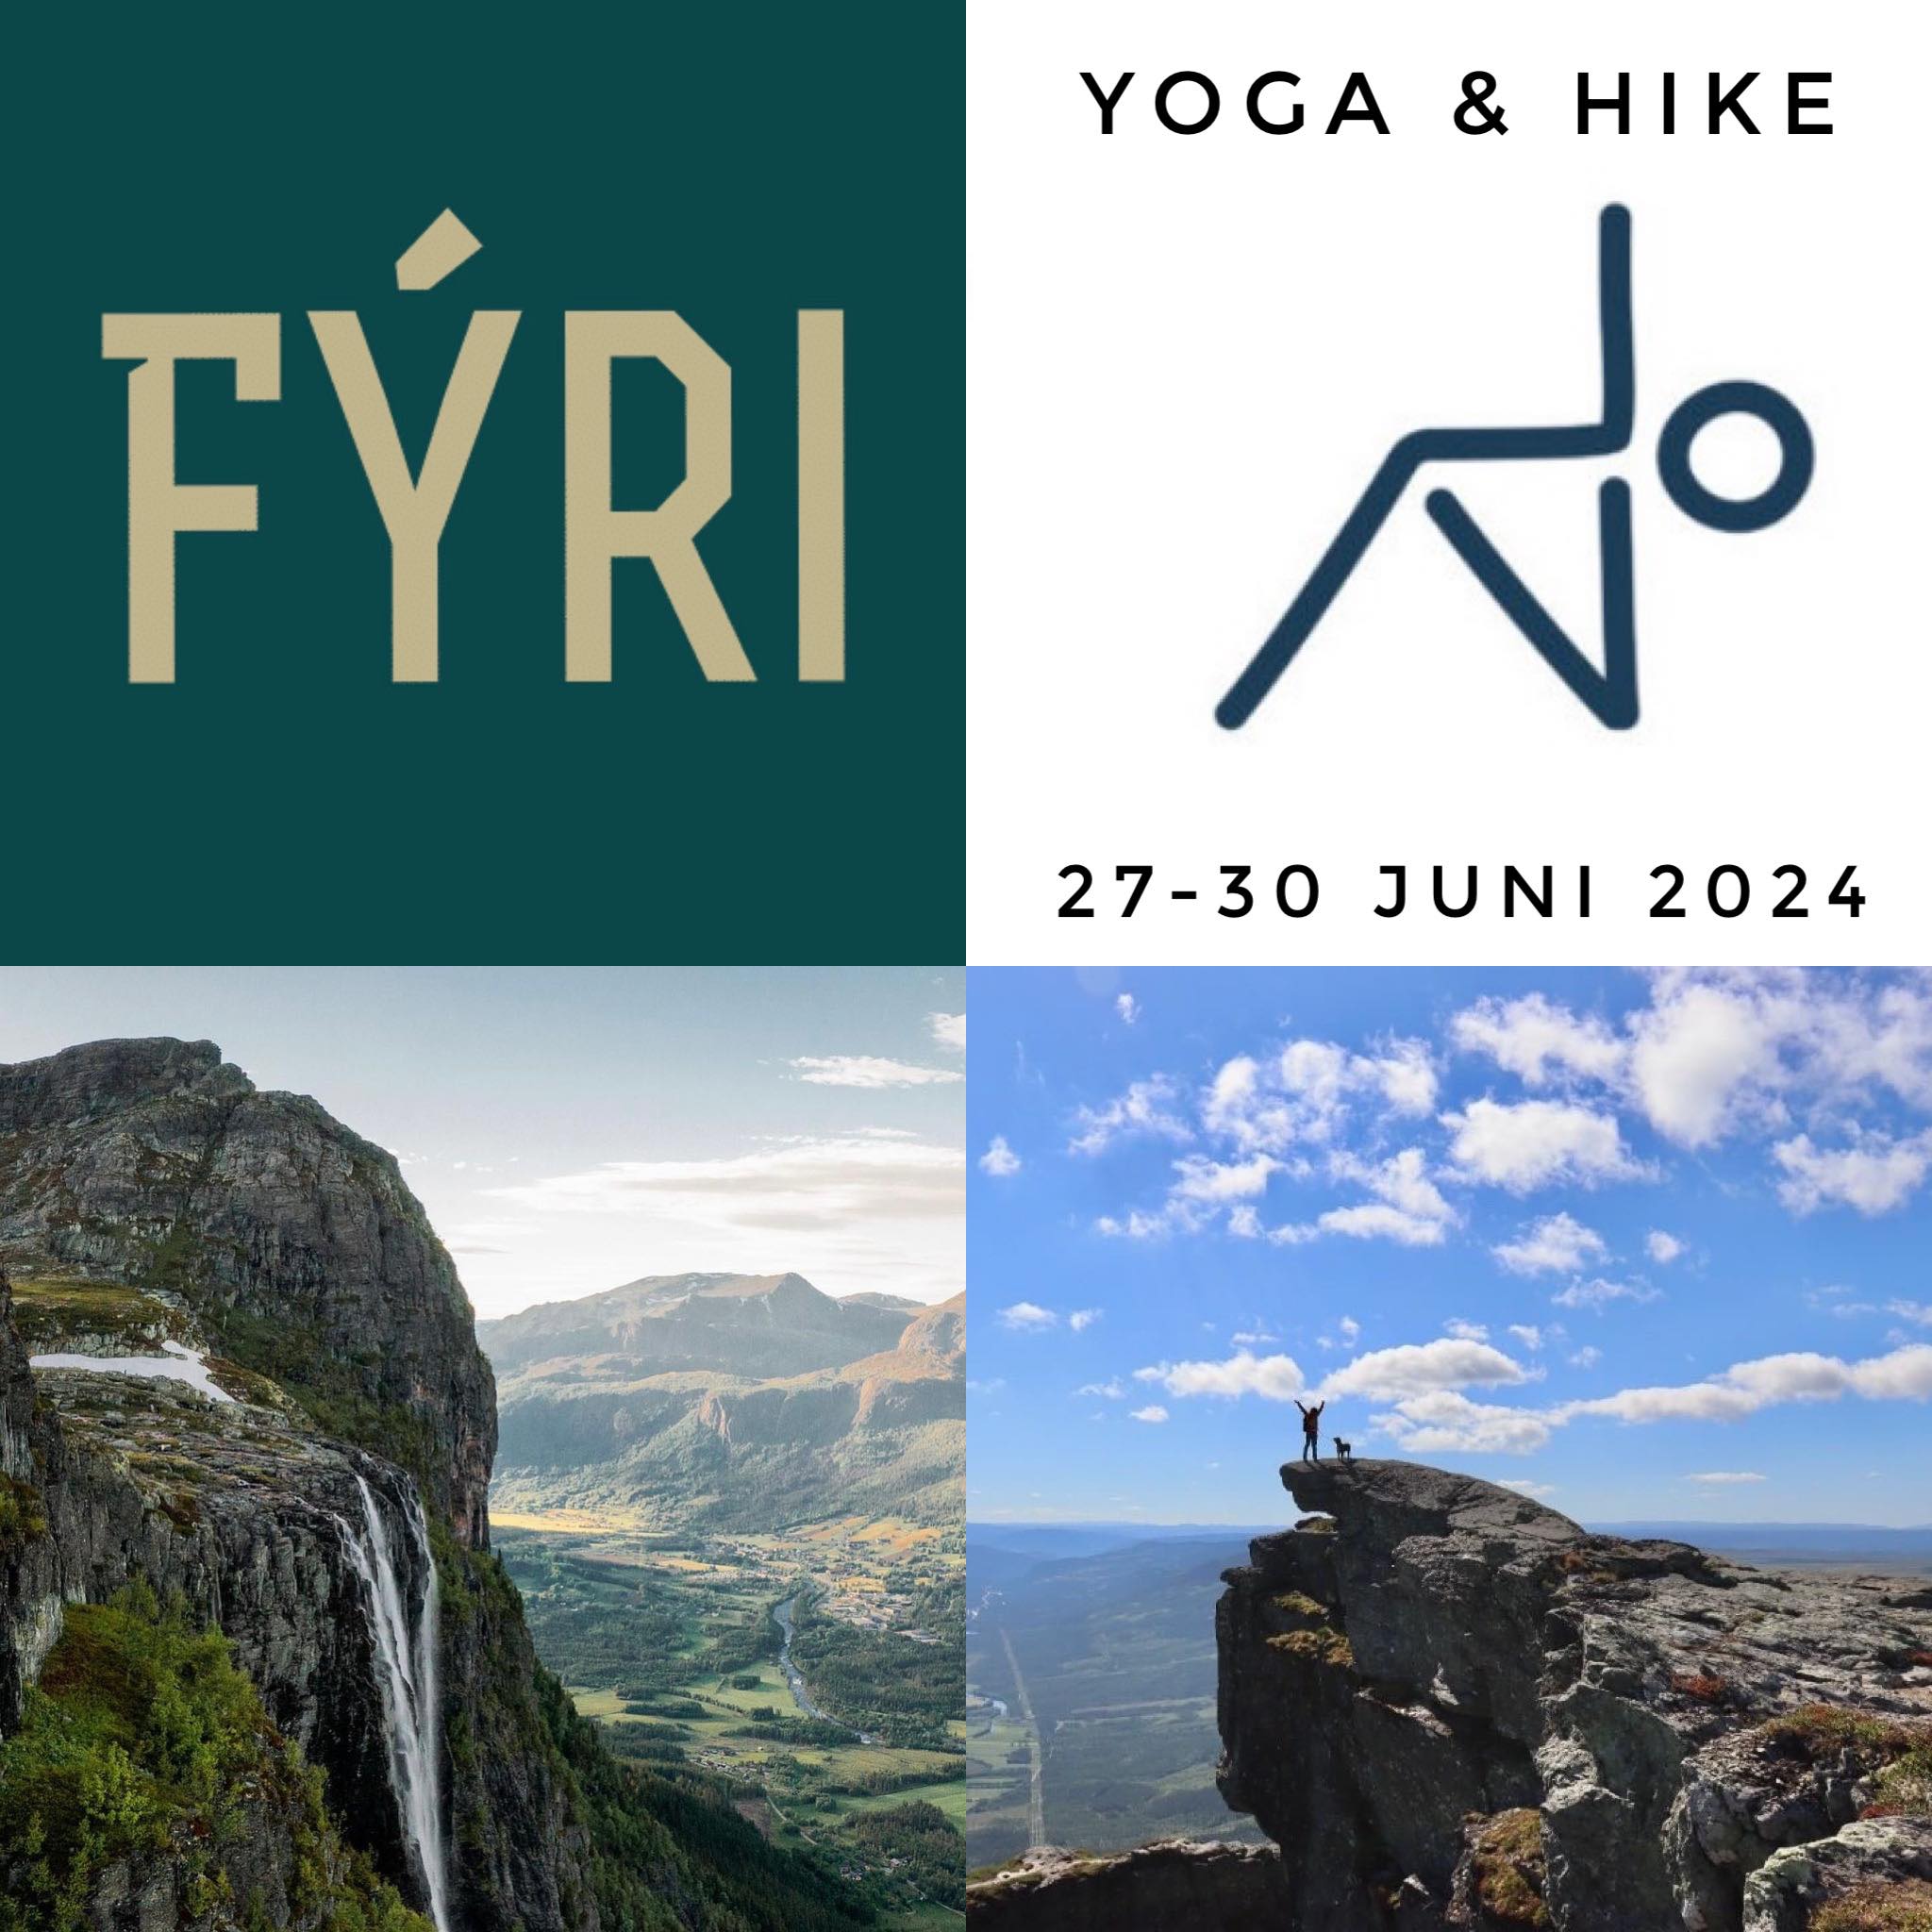 YOGA & HIKE 27-30 JUNI 2024 - FYRI RESORT